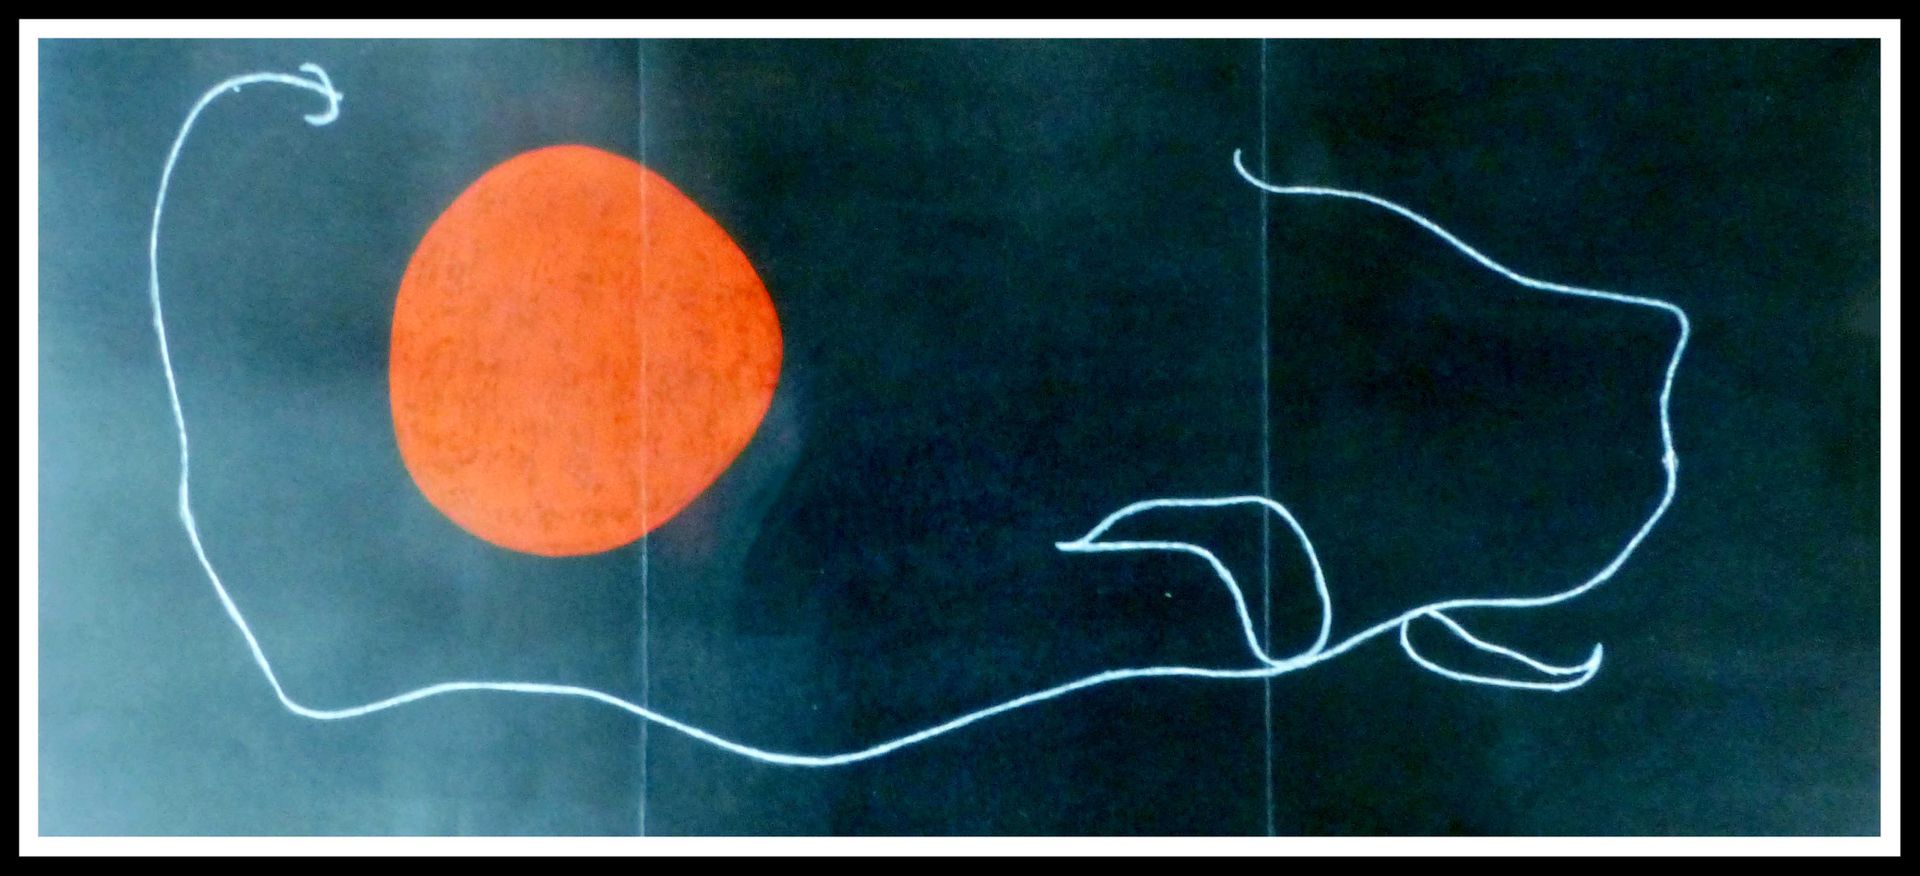 Joan Miro Joan MIRO (1893 - 1983)

Composition tache rouge sur fond noir

1961

&hellip;